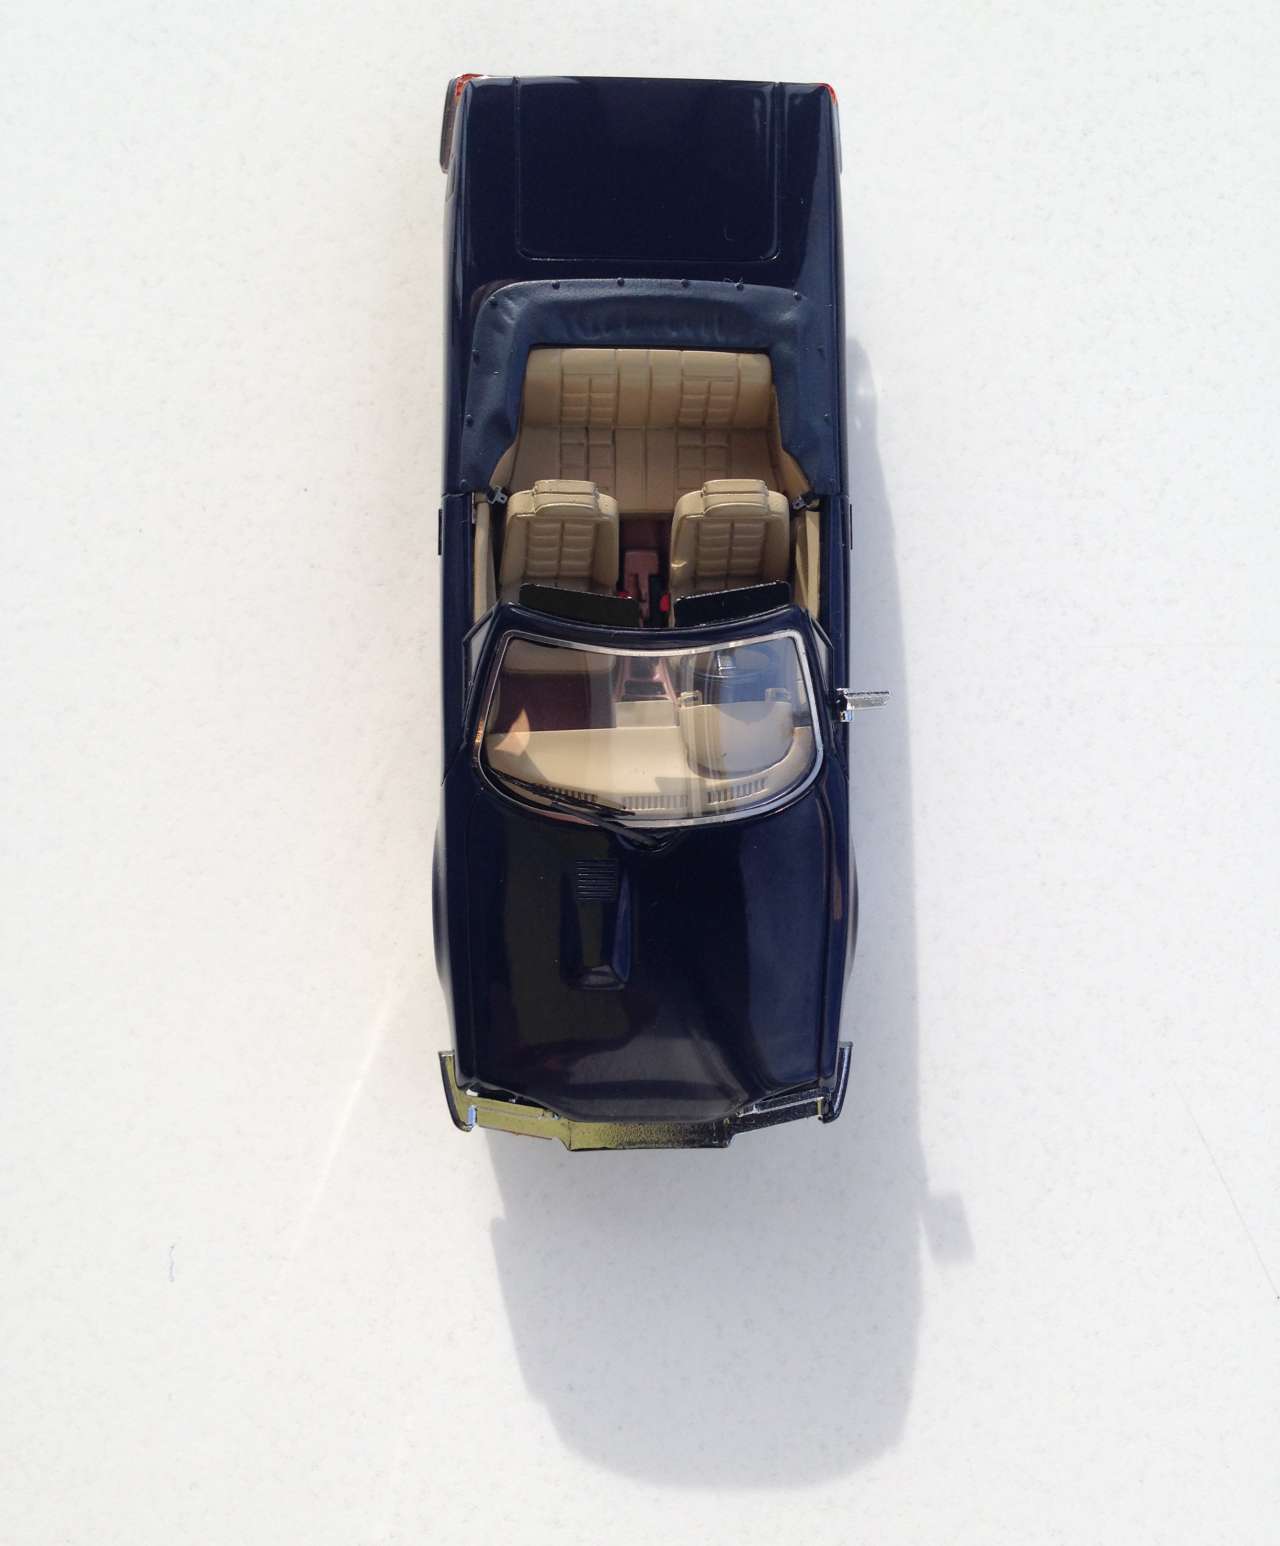 AutoRAI in Miniatuur: Citroën CX Orphée, cabriolet in de geest van de grote Franse carrossiers